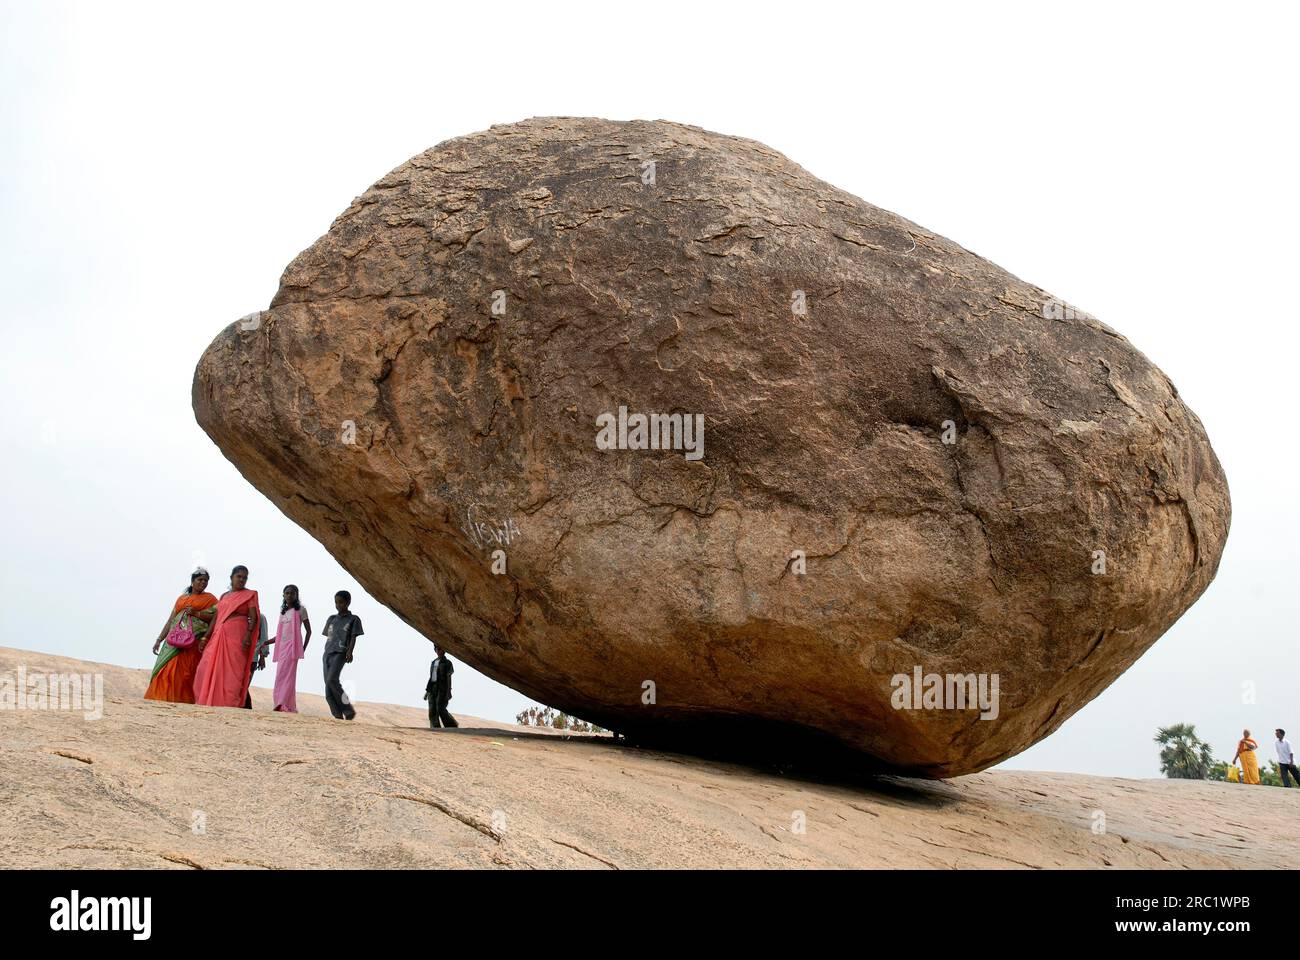 Krishna`s Butter Ball, a Huge Boulder in Mamallapuram, Tamil Nadu, India  Stock Image - Image of site, asia: 222414965